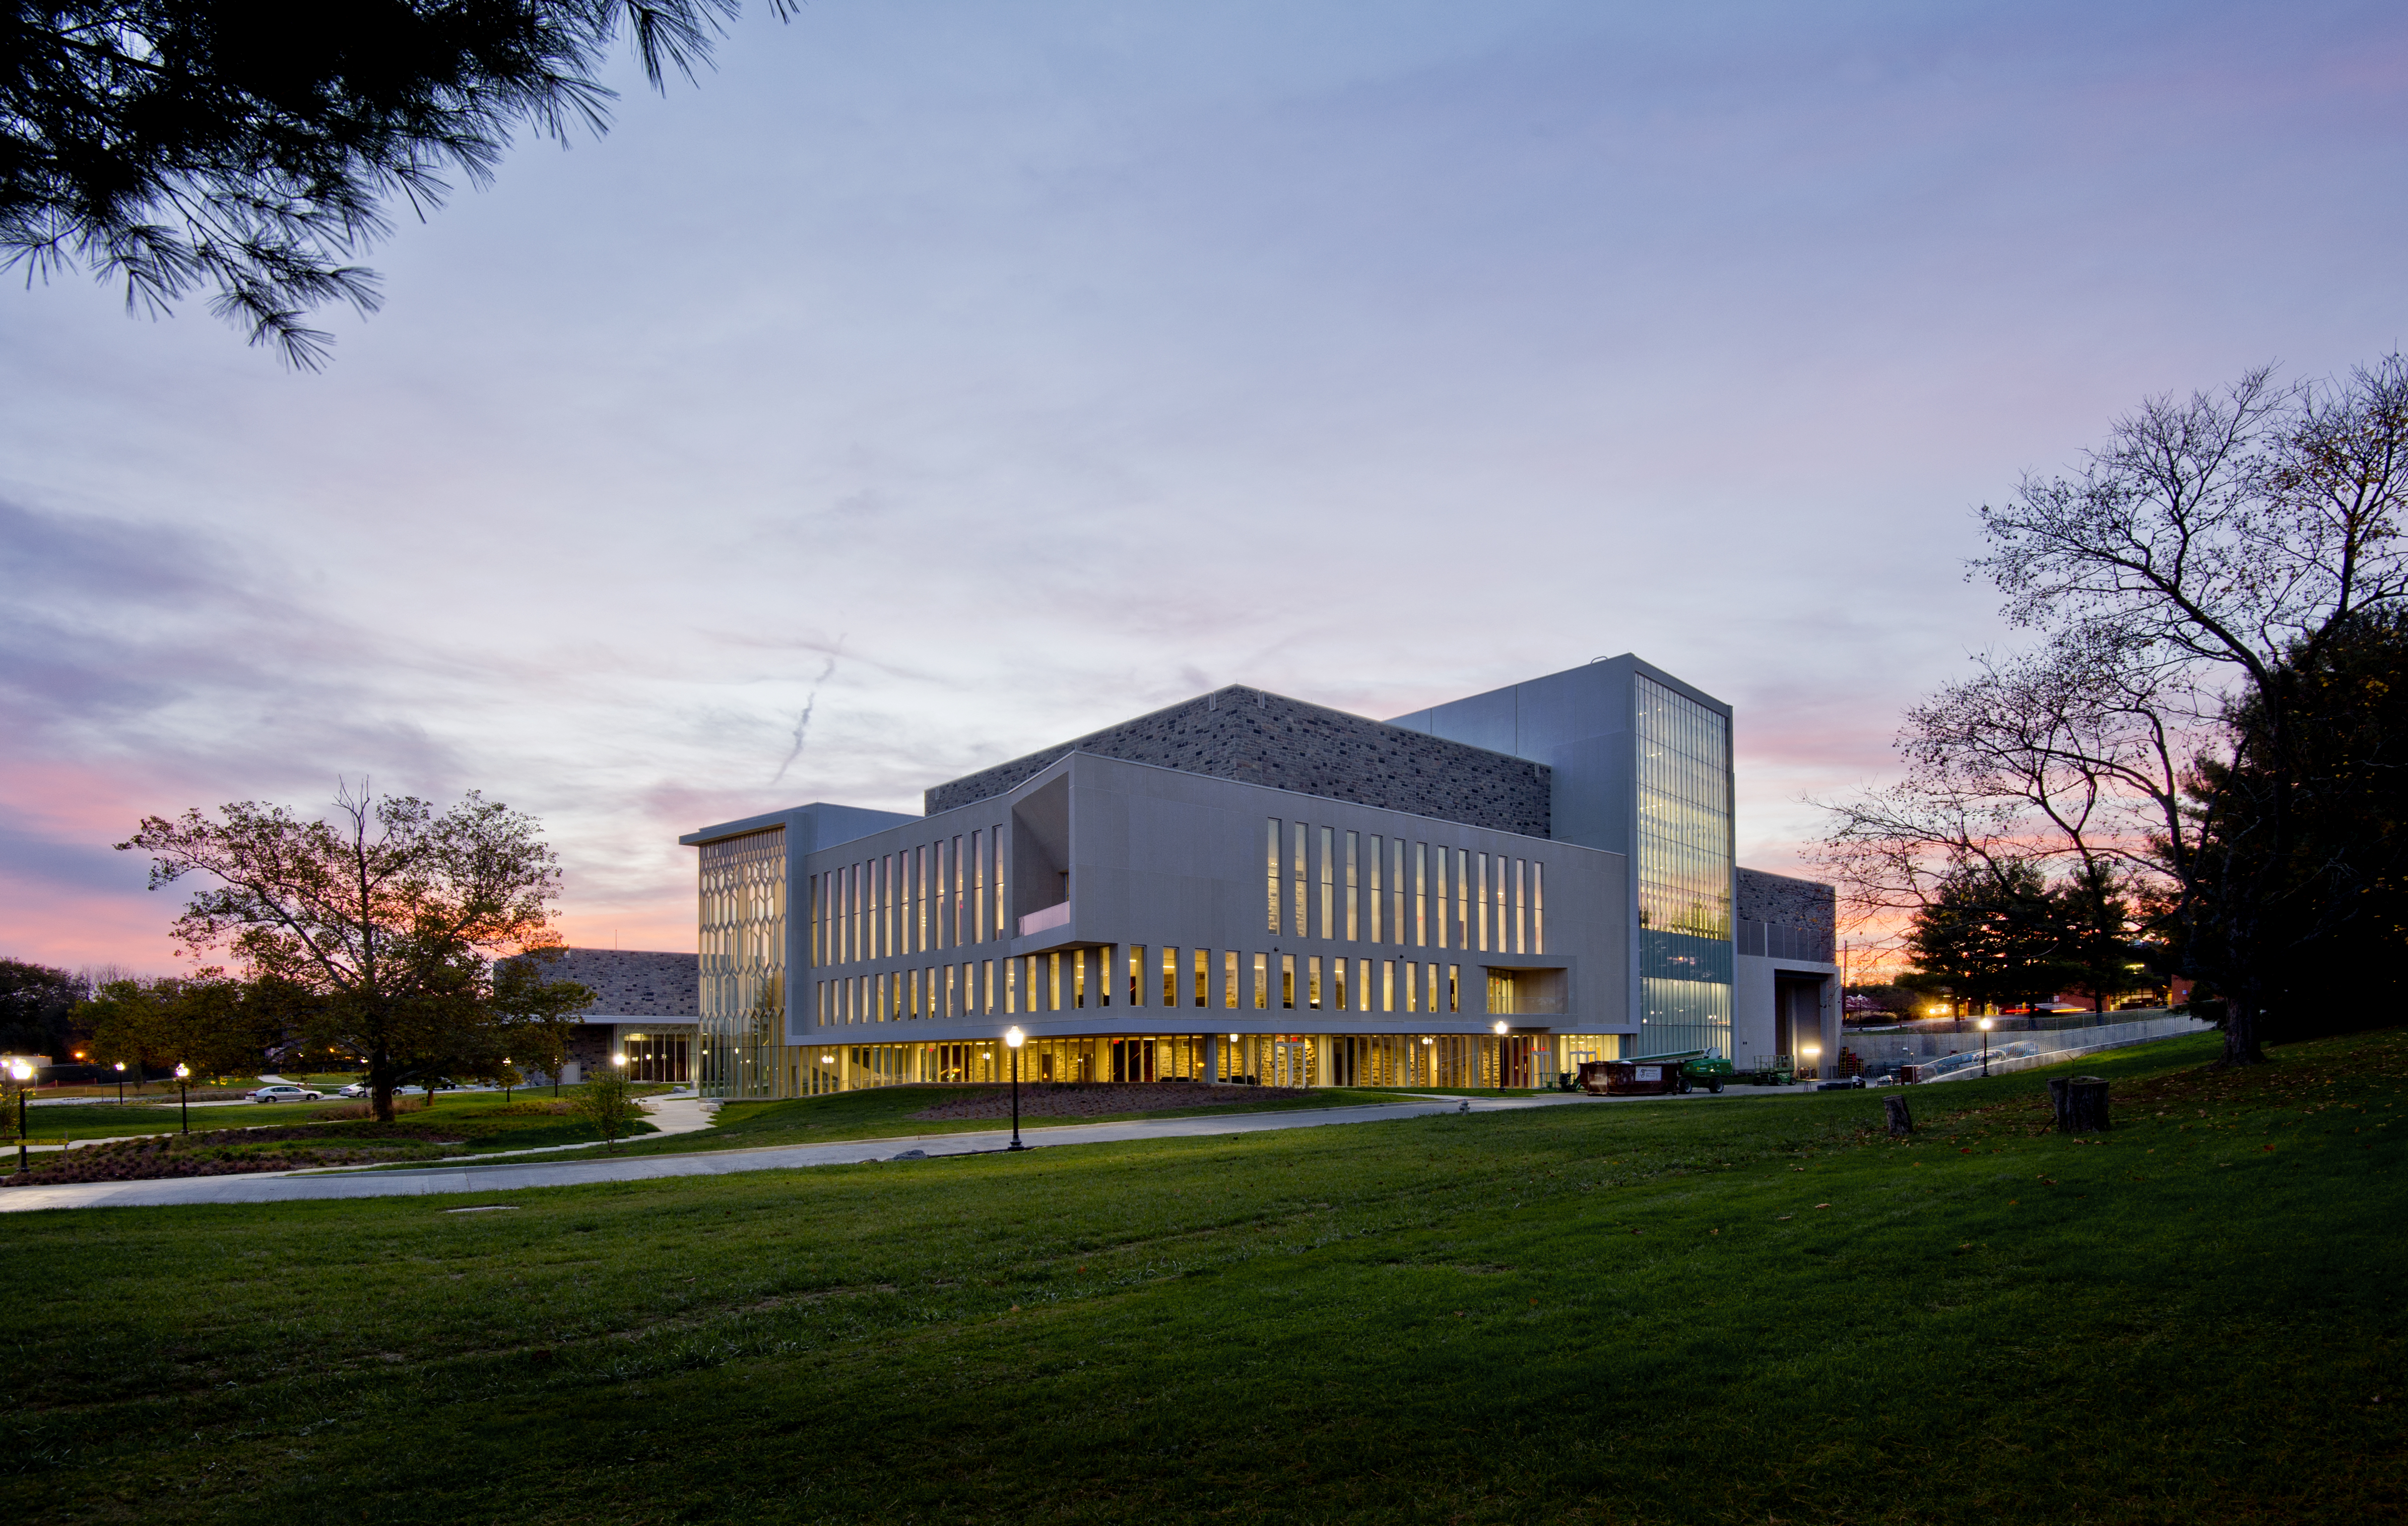 The Moss Arts Center at Virginia Tech